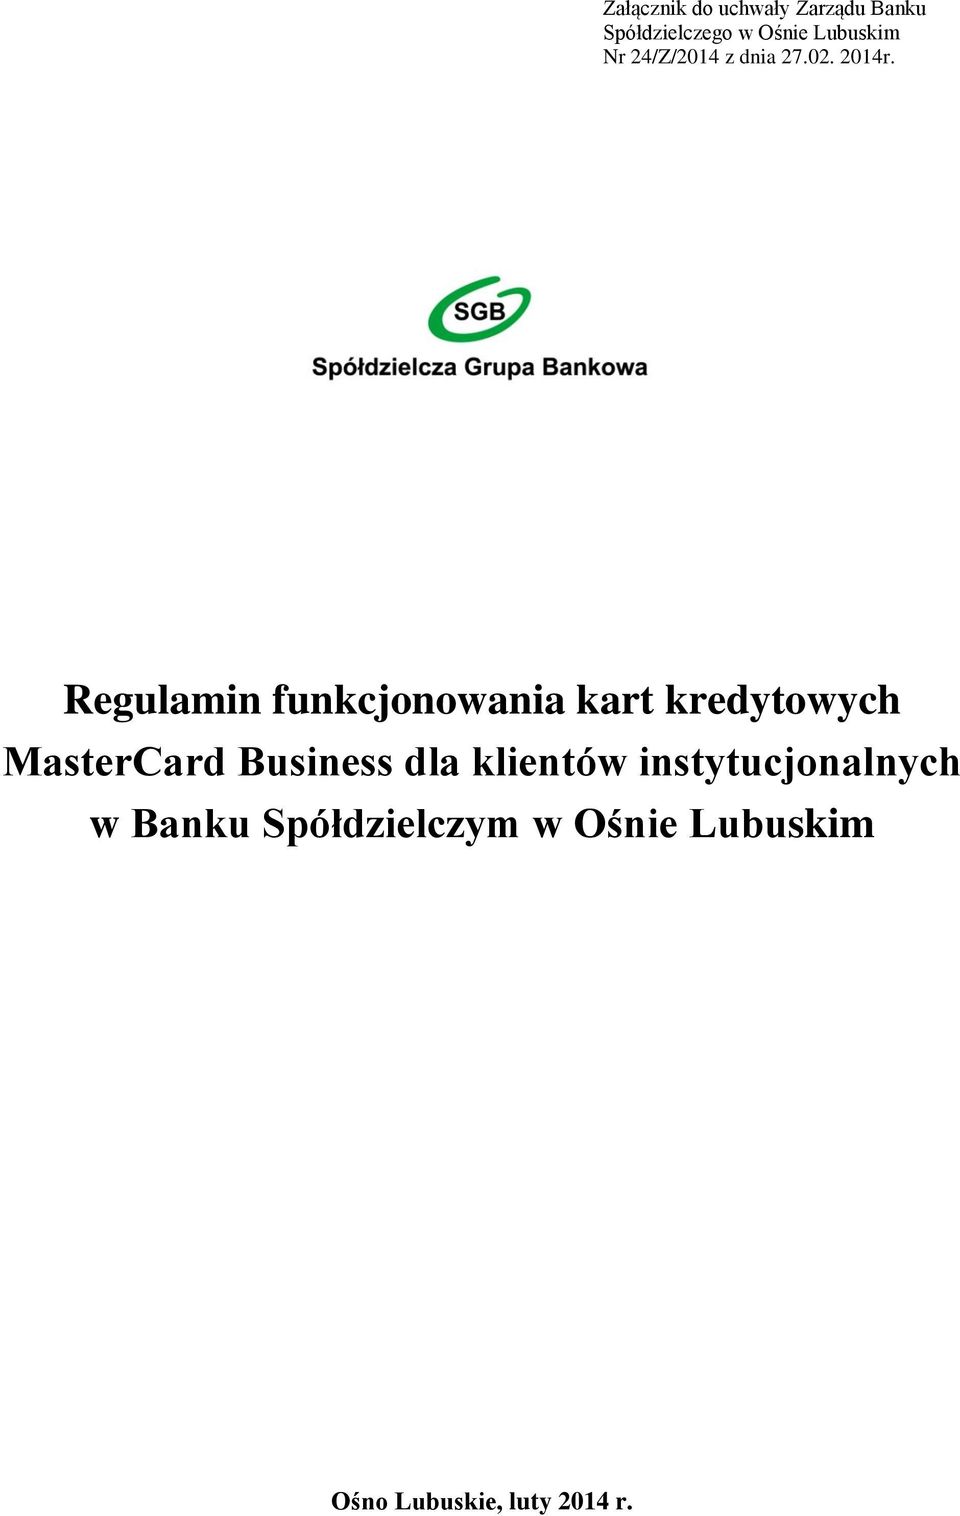 Regulamin funkcjonowania kart kredytowych MasterCard Business